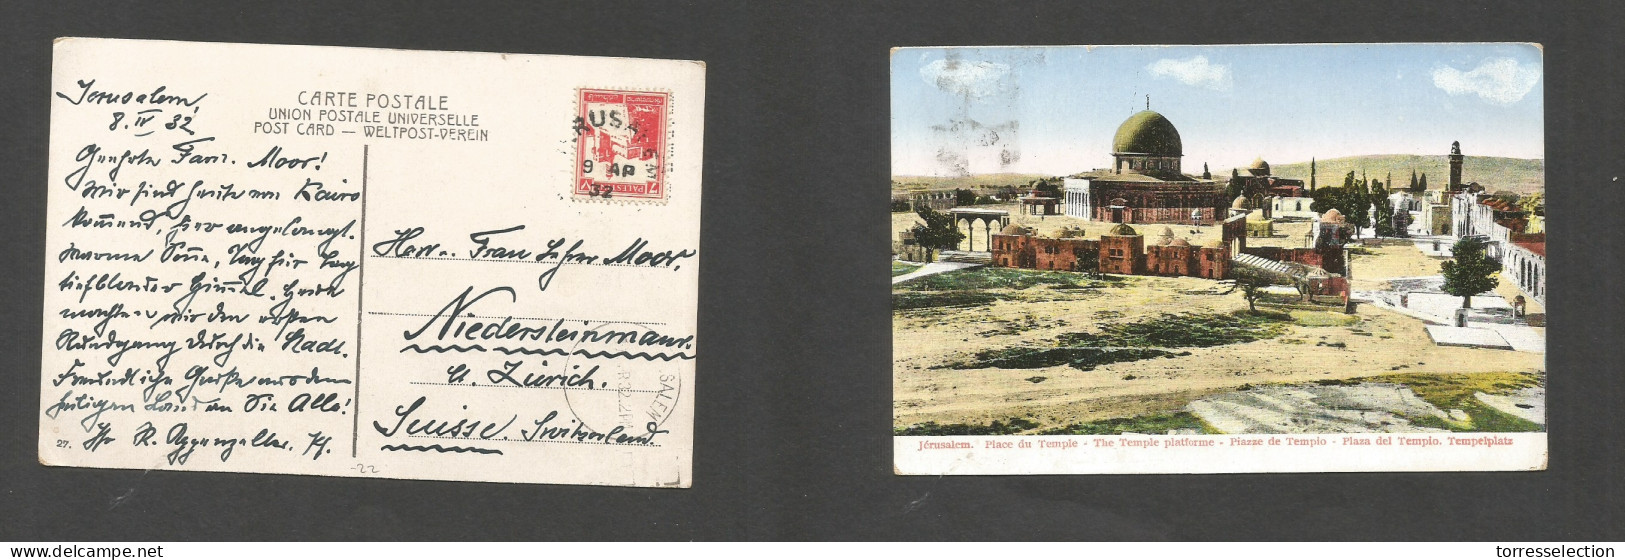 PALESTINE. 1932 (8 Apr) Jerusalem - Switzerland, Niedersleinmans Via Salem. Fkd Ppc. Fine. SALE. - Palestine